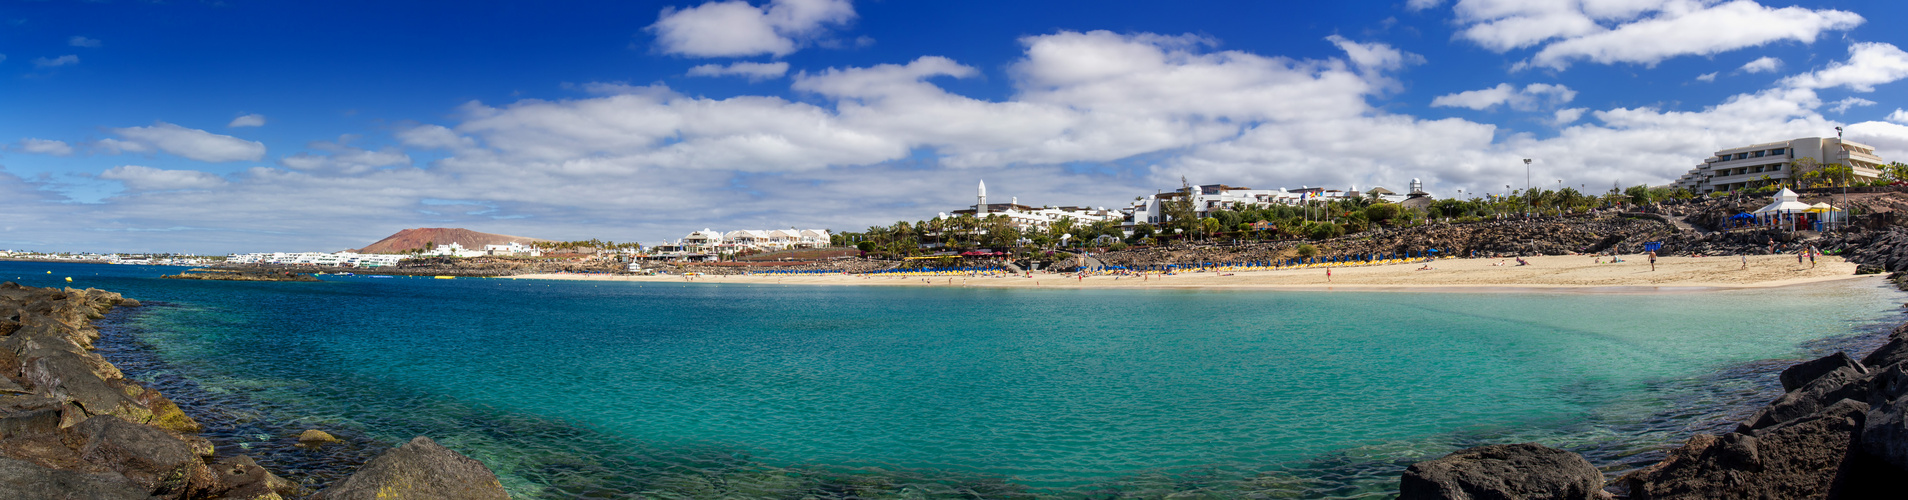 Lanzarote - Playa Dorada